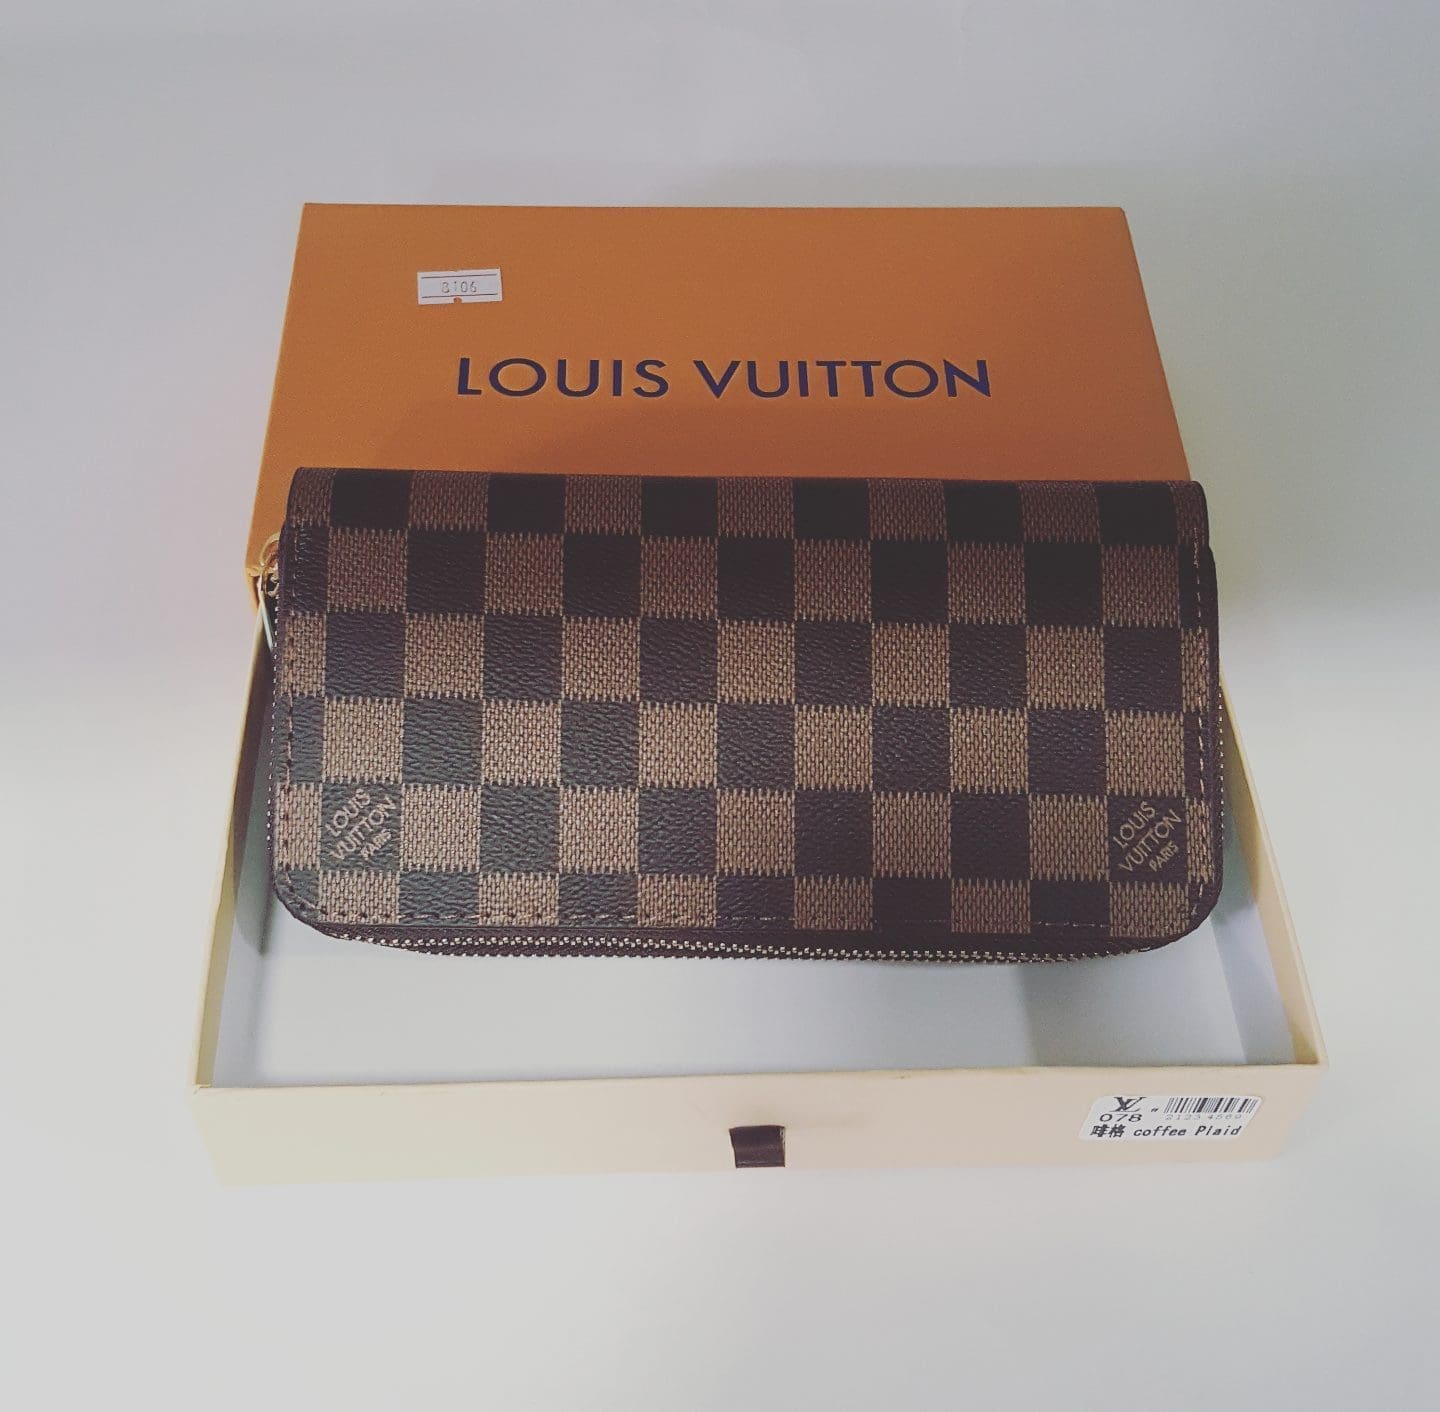 8106 Louis vuitton coffee plaid wallet